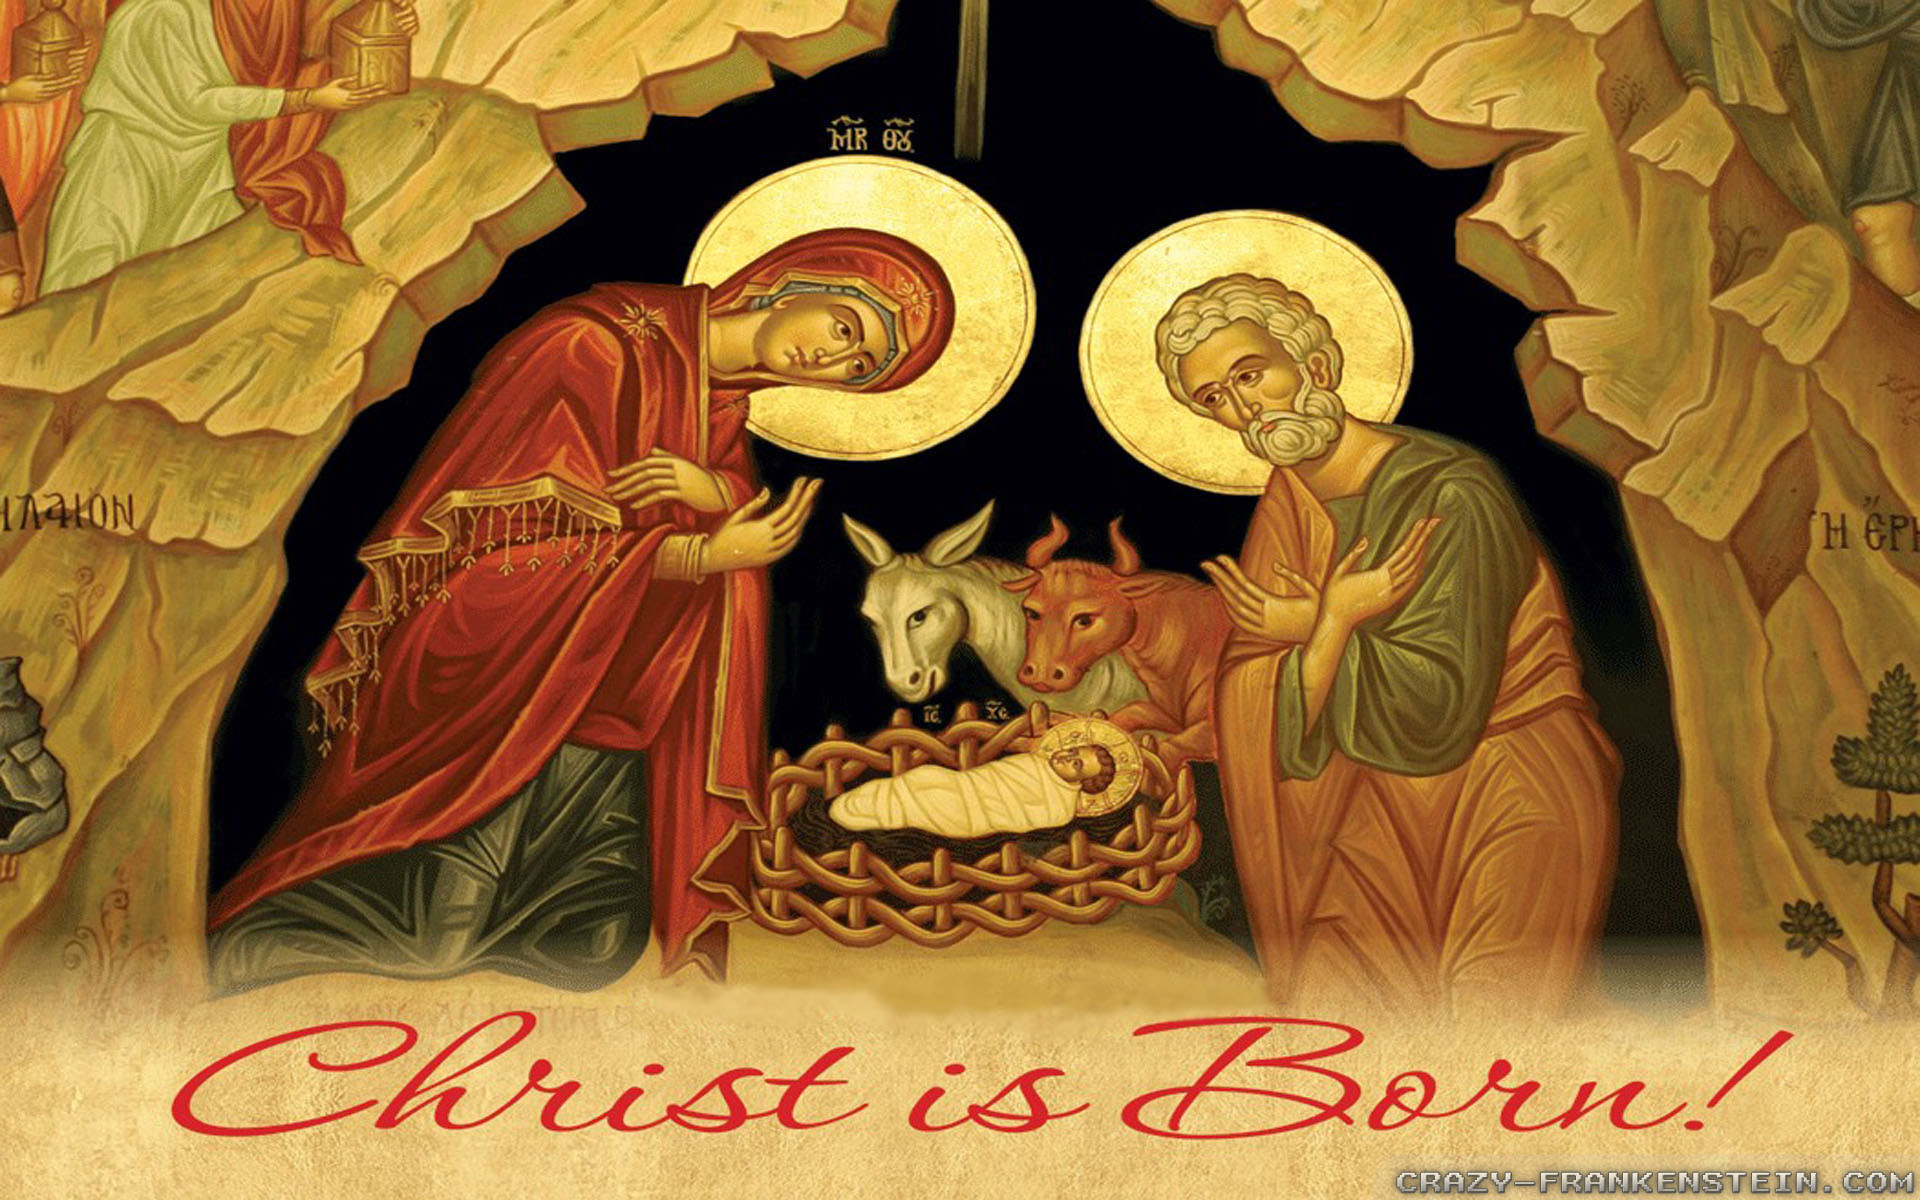 Wallpaper: Born Christian Christmas wallpapers. Resolution: 1024×768 |  1280×1024 | 1600×1200. Widescreen Res: 1440×900 | 1680×1050 | 1920×1200